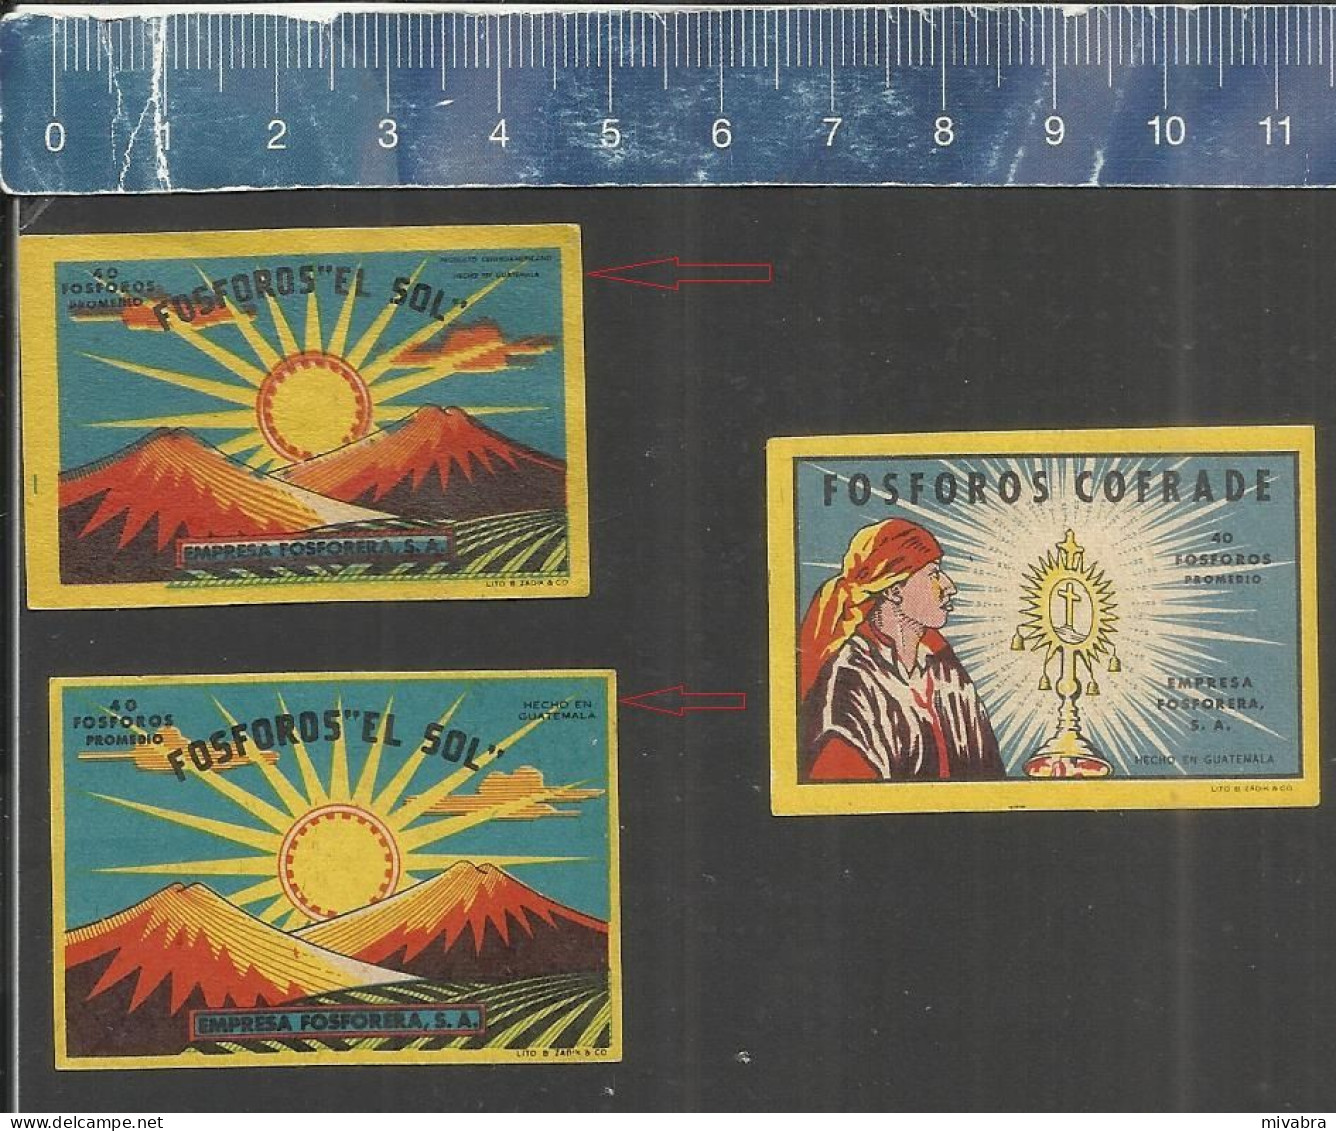 FOSFOROS EL SOL & COFRADE - OLD MATCHBOX LABELS MADE IN GUATEMALA - Zündholzschachteletiketten